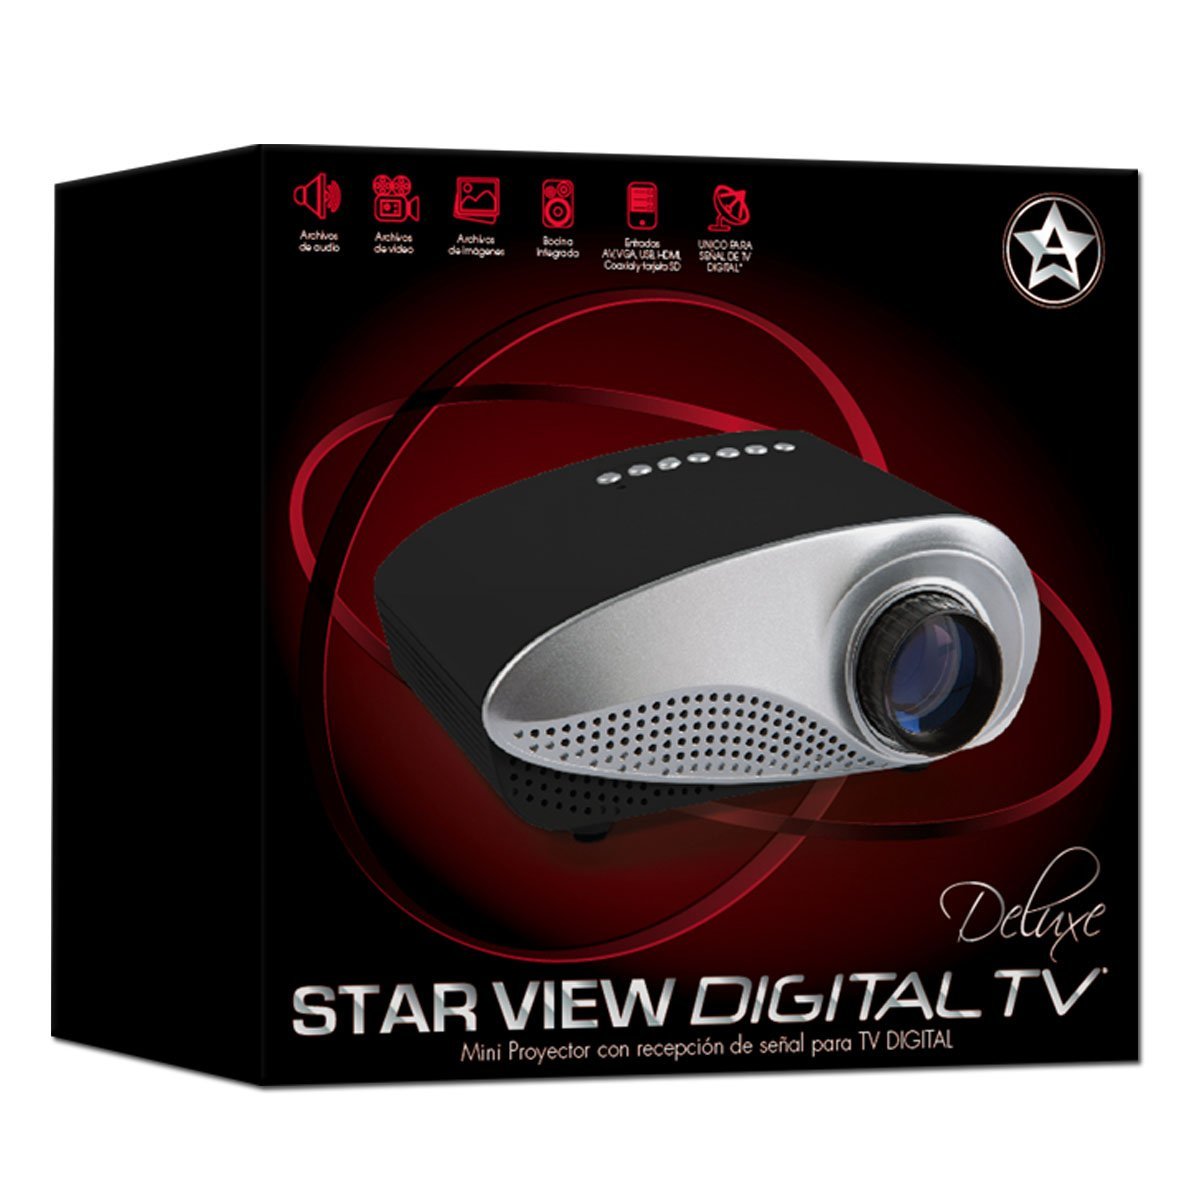 Starview Digital Tv Mod. Starviewdig